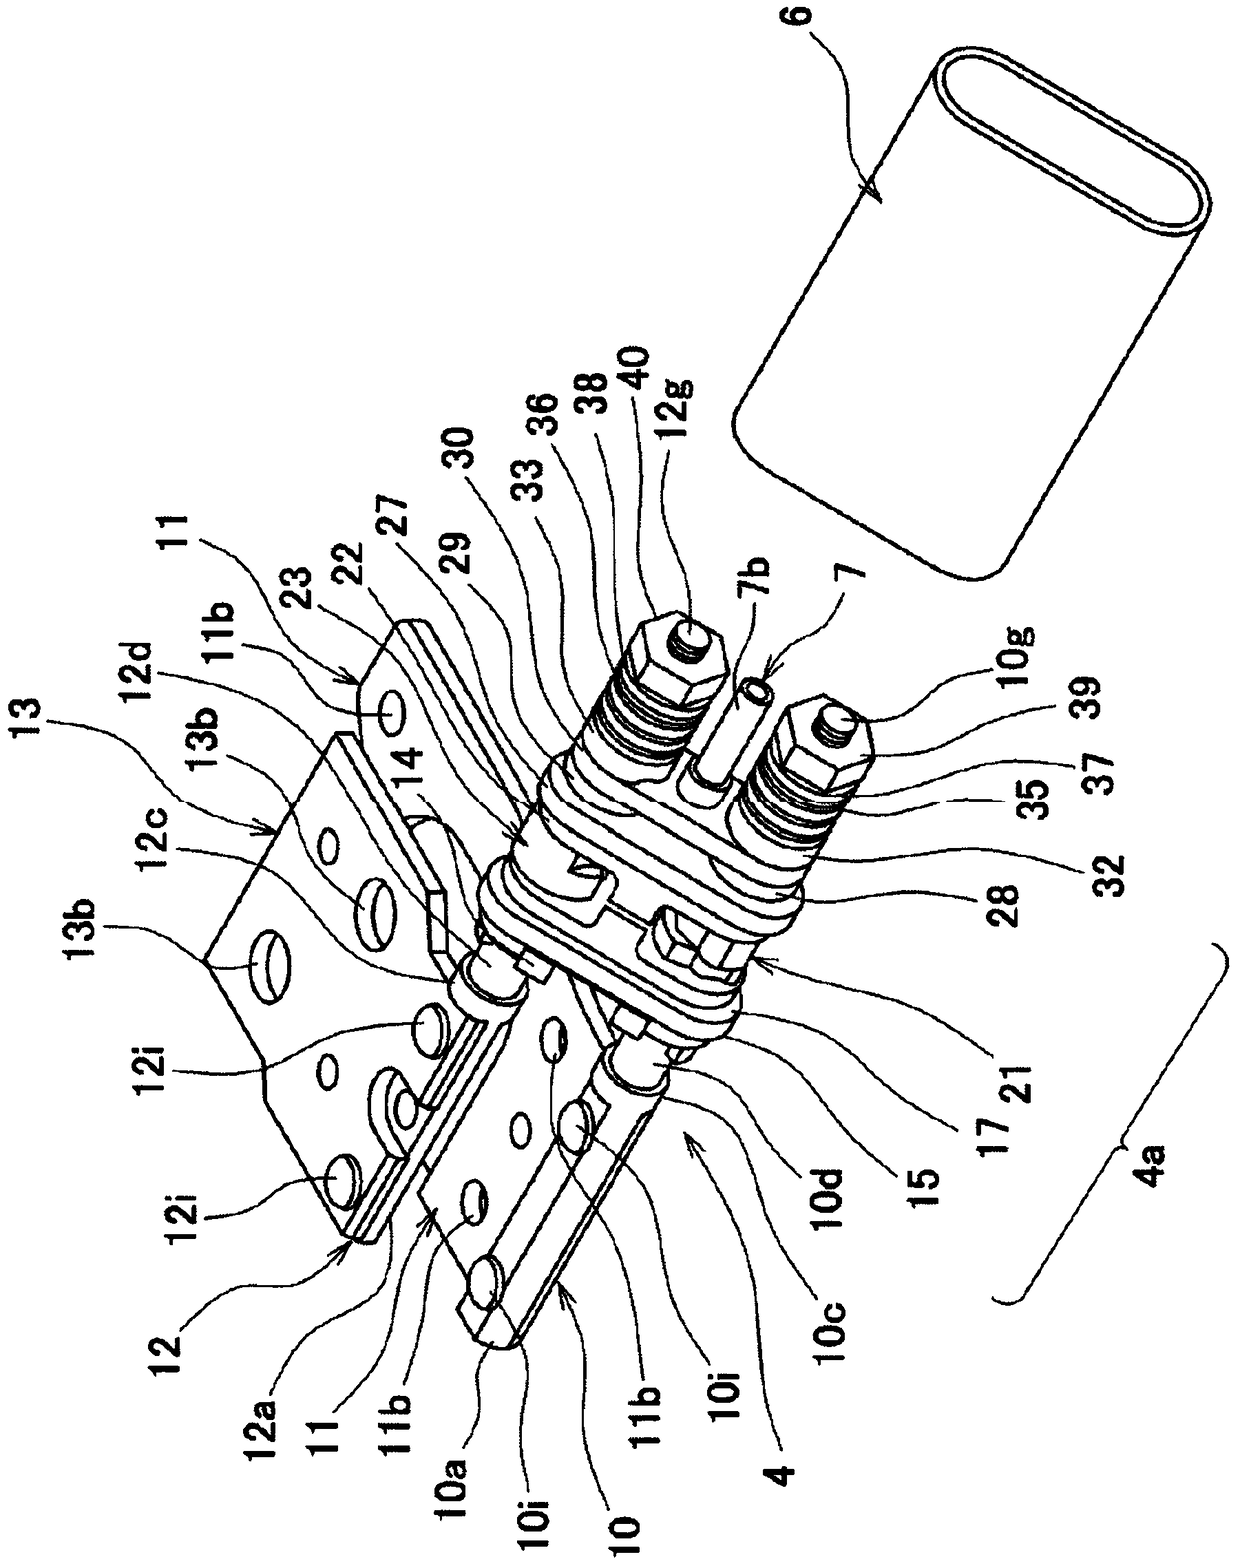 Biaxial hinge and terminal machine using the biaxial hinge